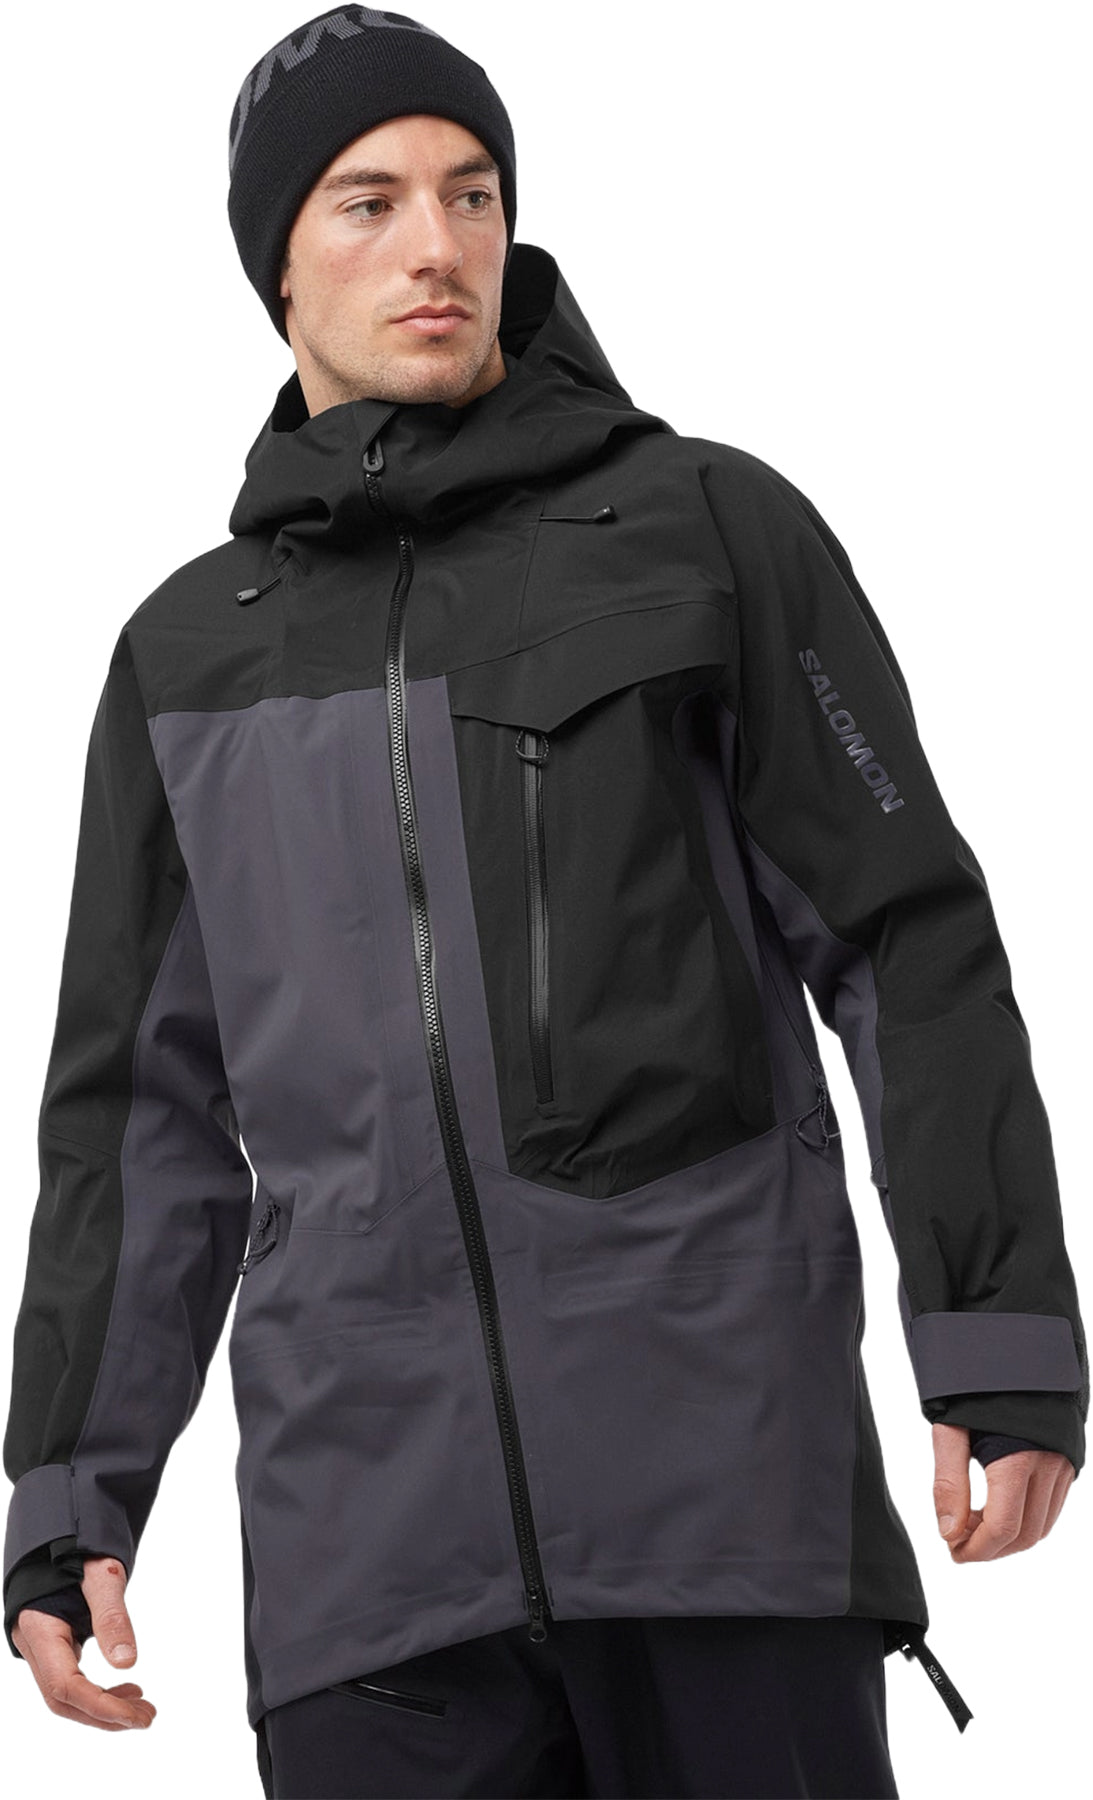 Salomon MTN GORE-TEX 3 Layer Jacket - Men's